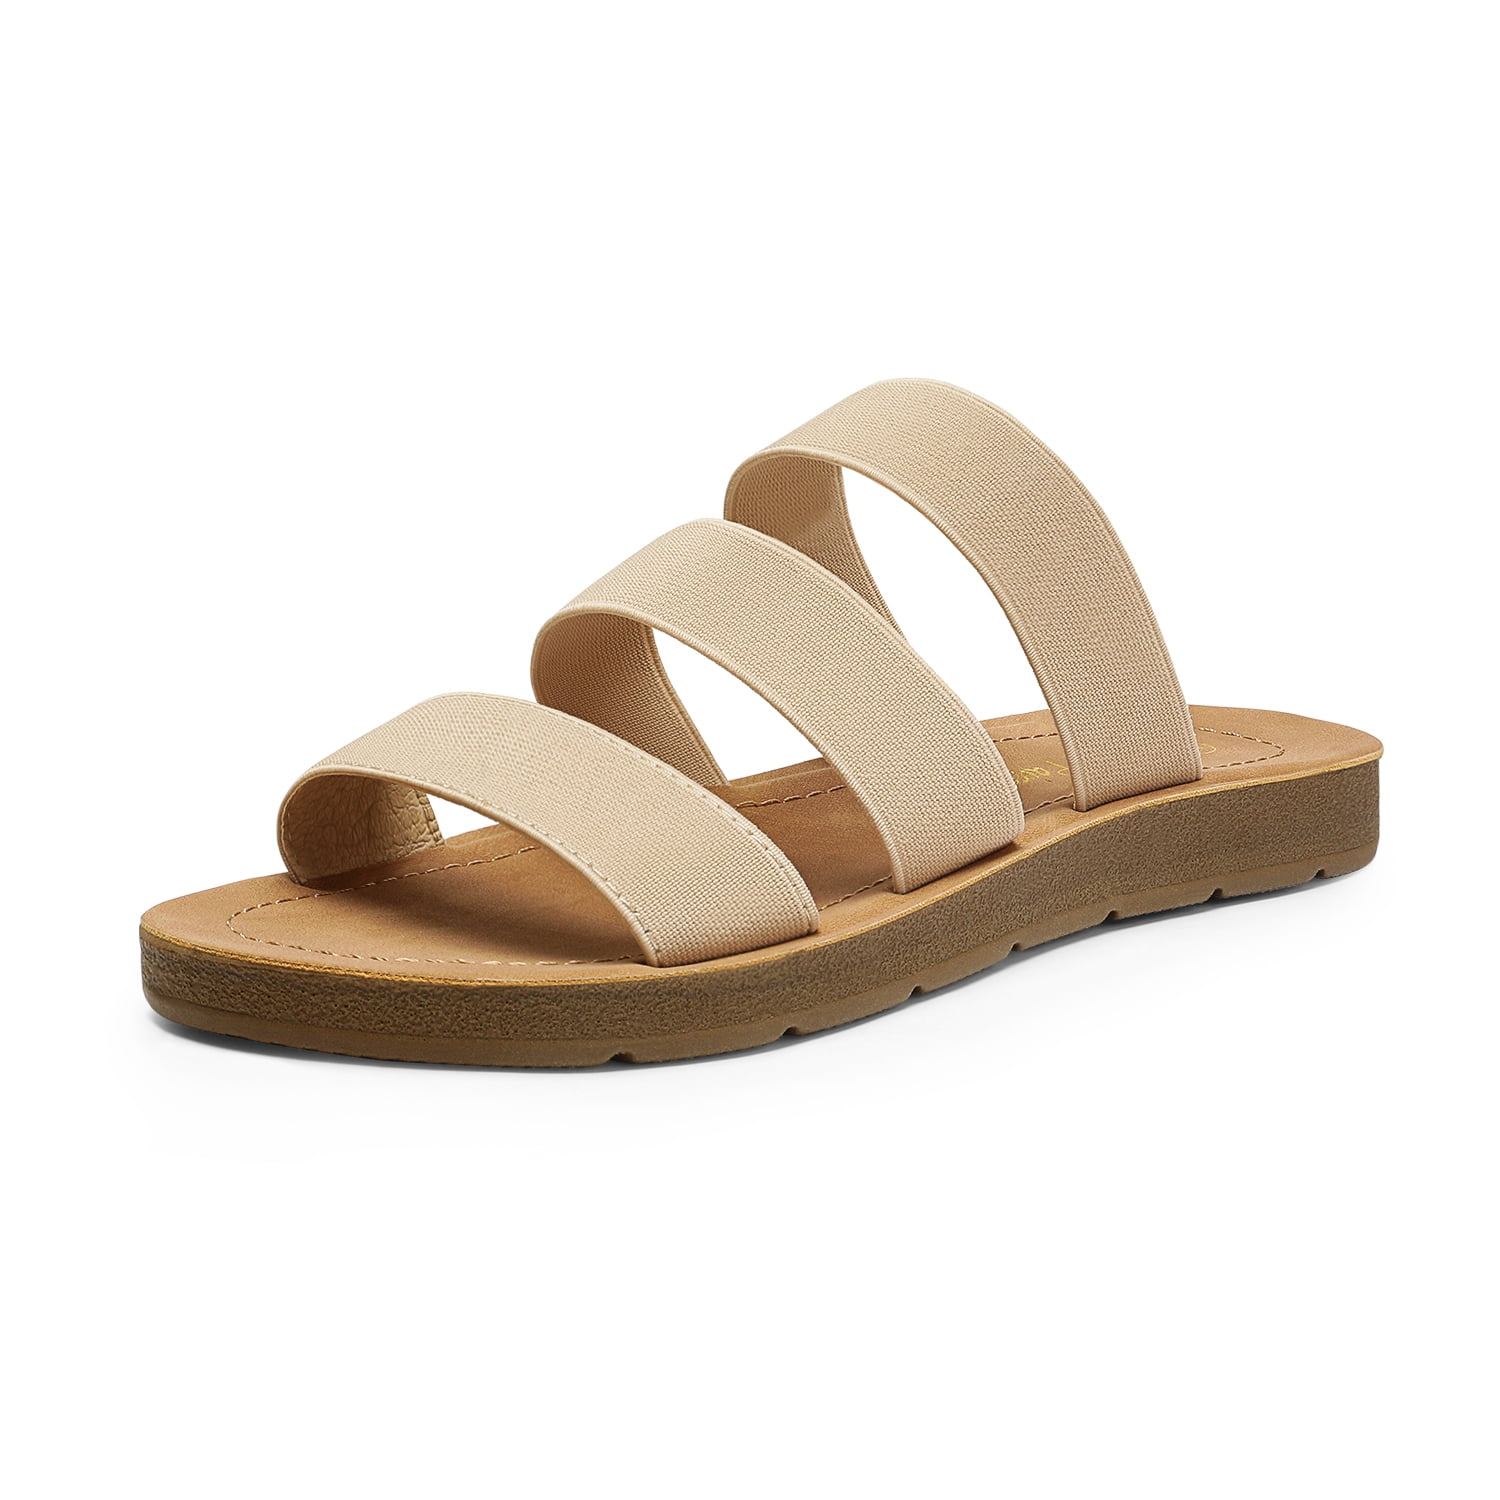 New Mens Summer Flipflop Grey Size 6-11 Urban Beach Sandals Toe Post Pool Shower